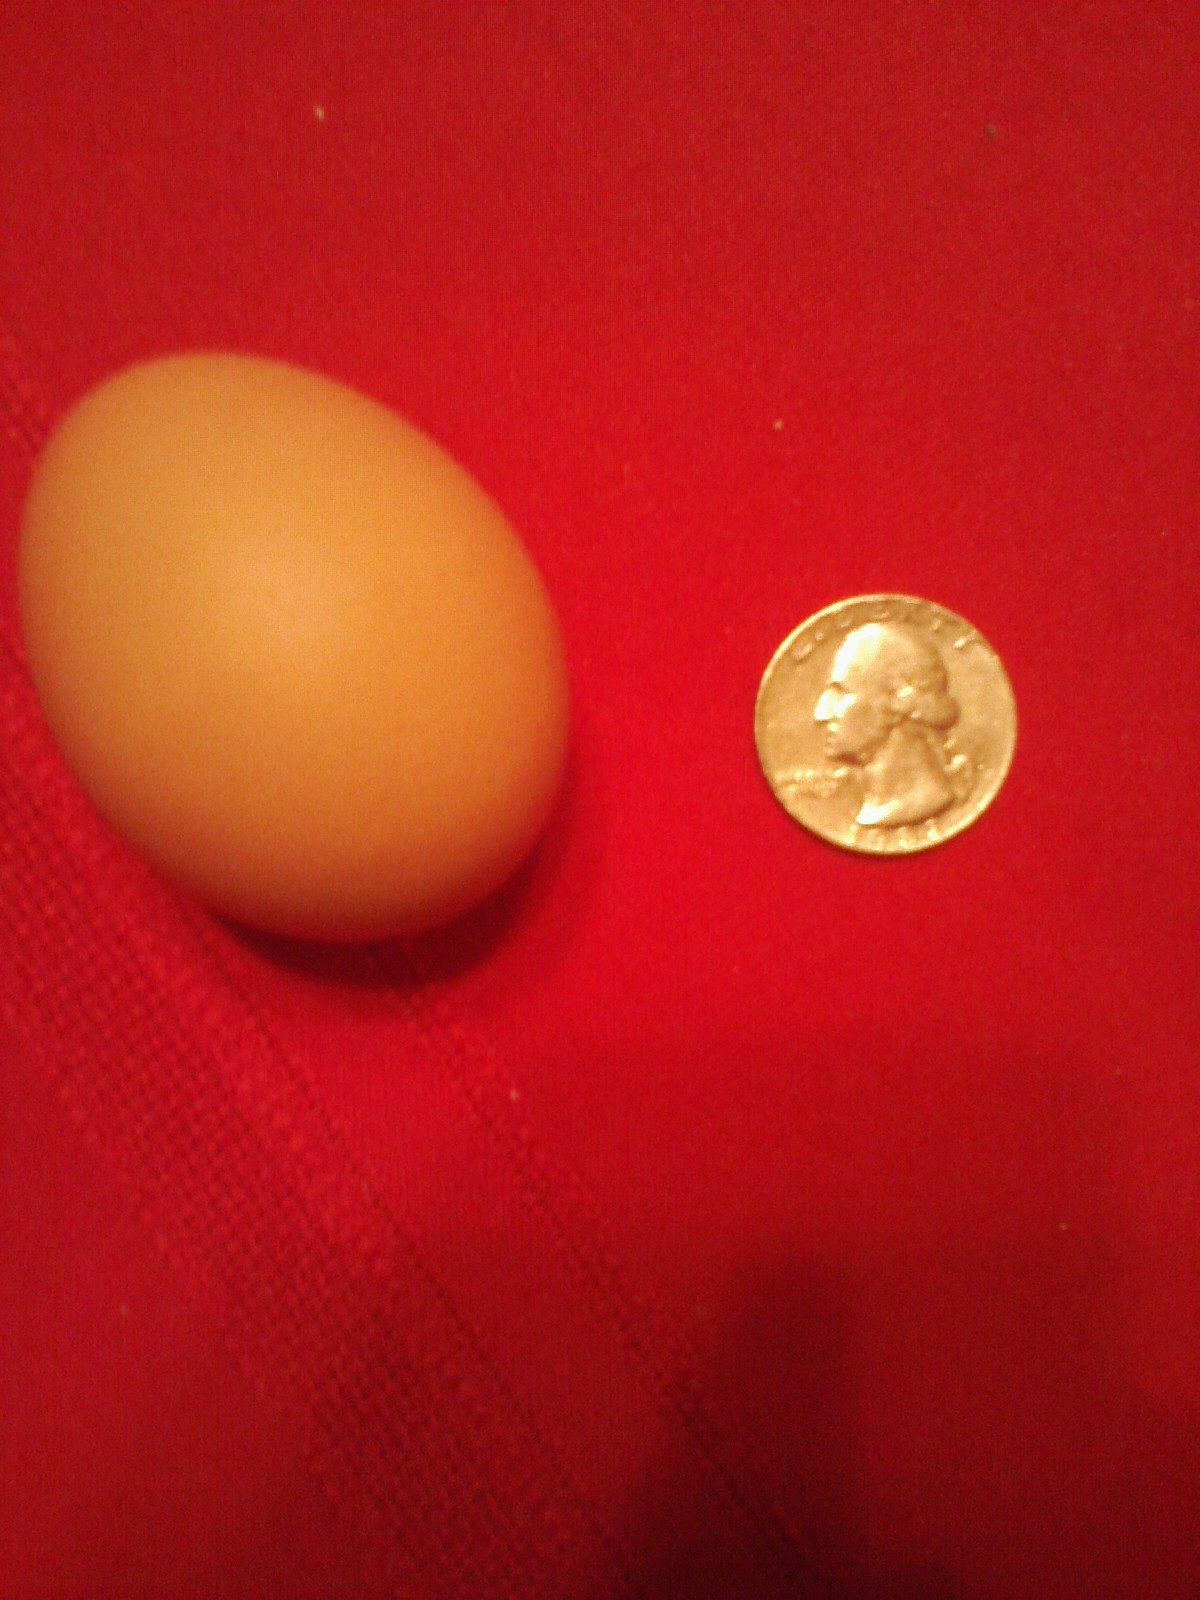 Rhode Island Egg